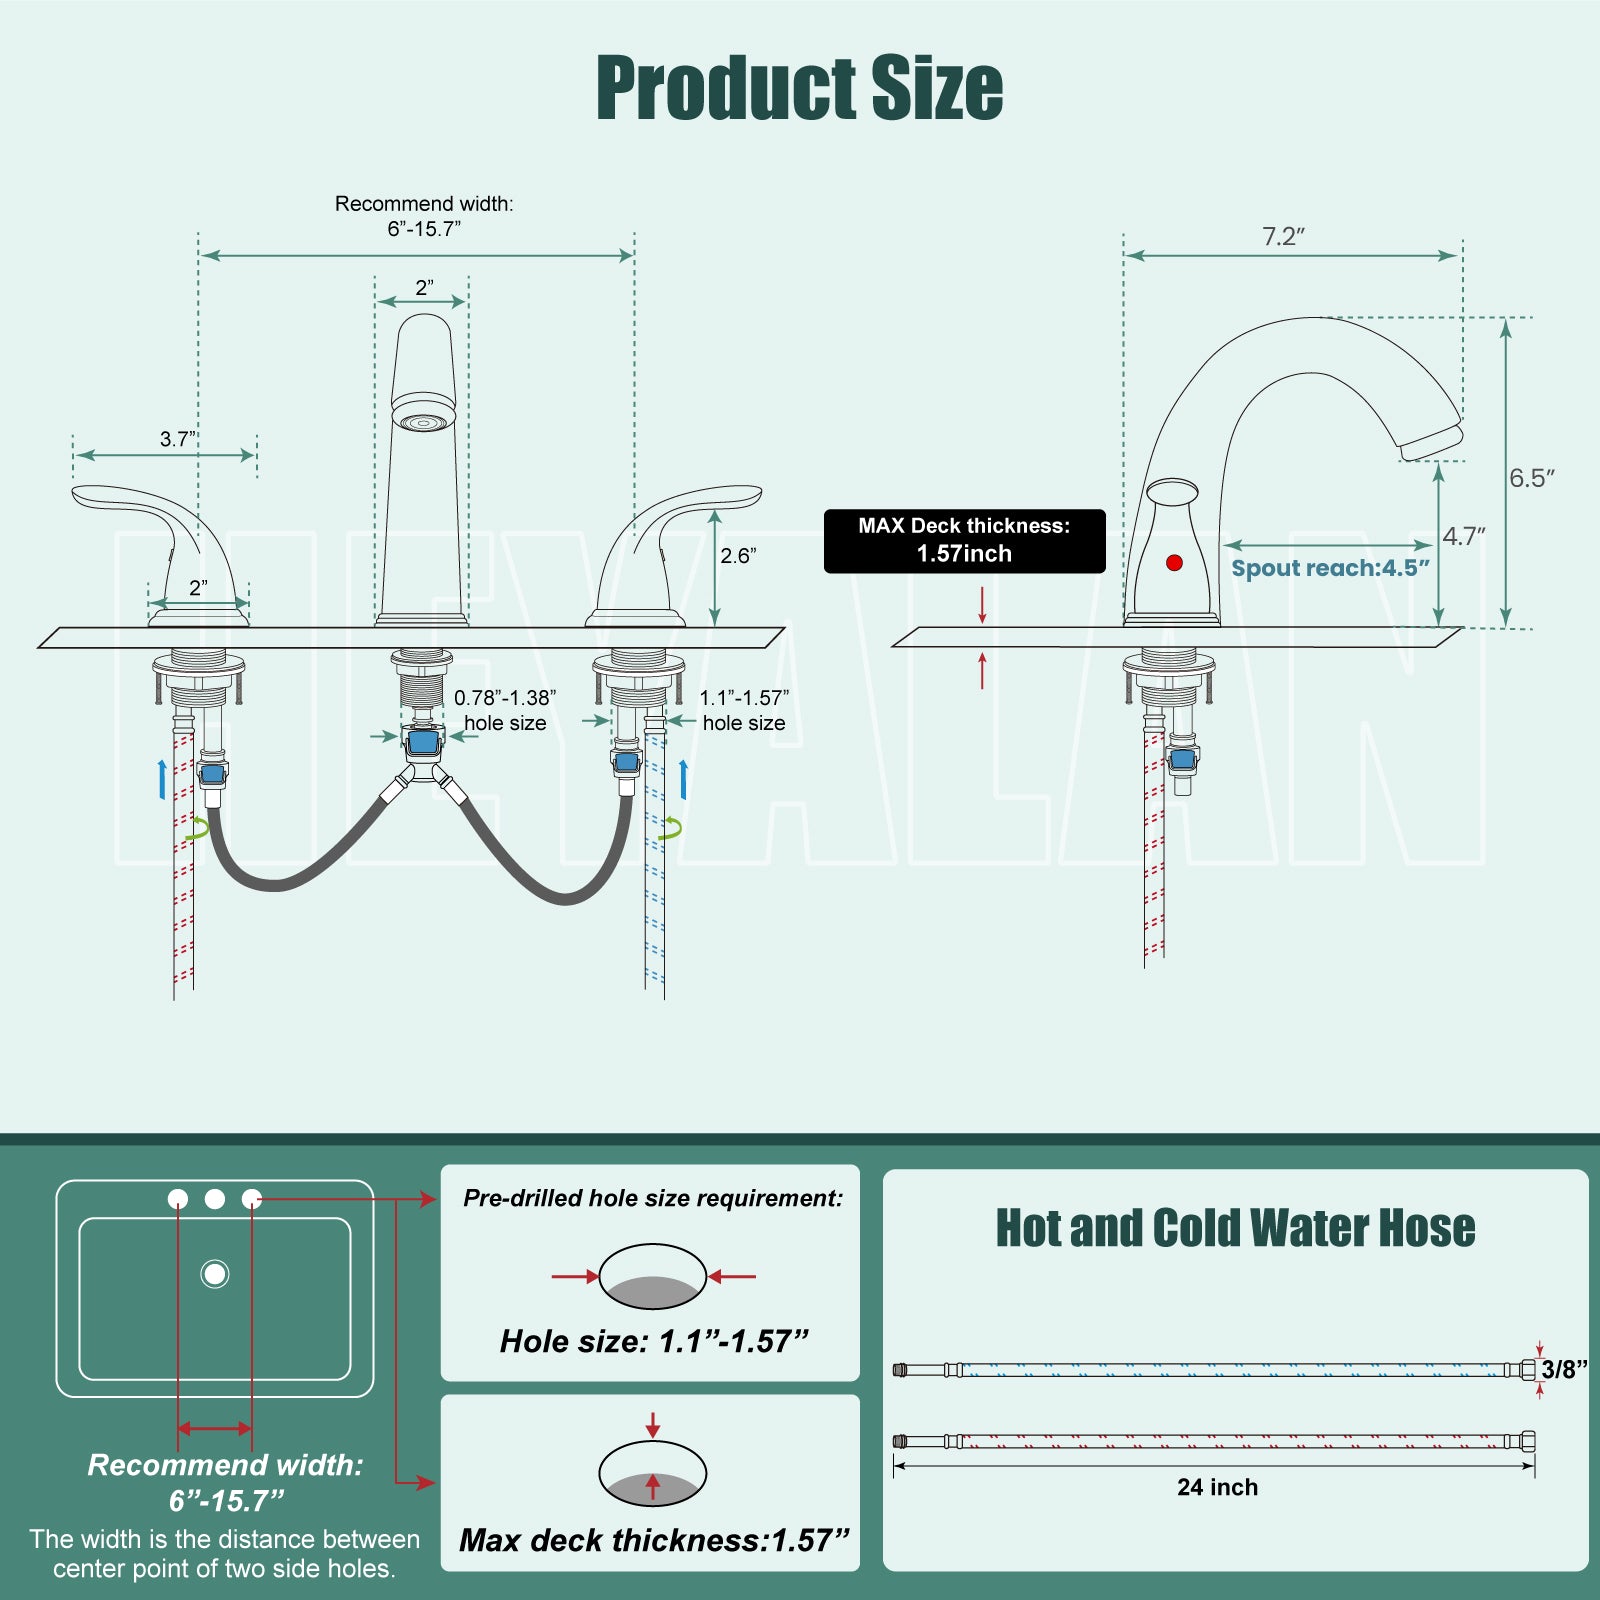 Heyalan Widespread 2 Handles 3 Holes Bathroom Vessel Sink Faucet with Pop Up Drain 8 Inch Centerset Deck Mounted Basin Bowl Mixer Tap